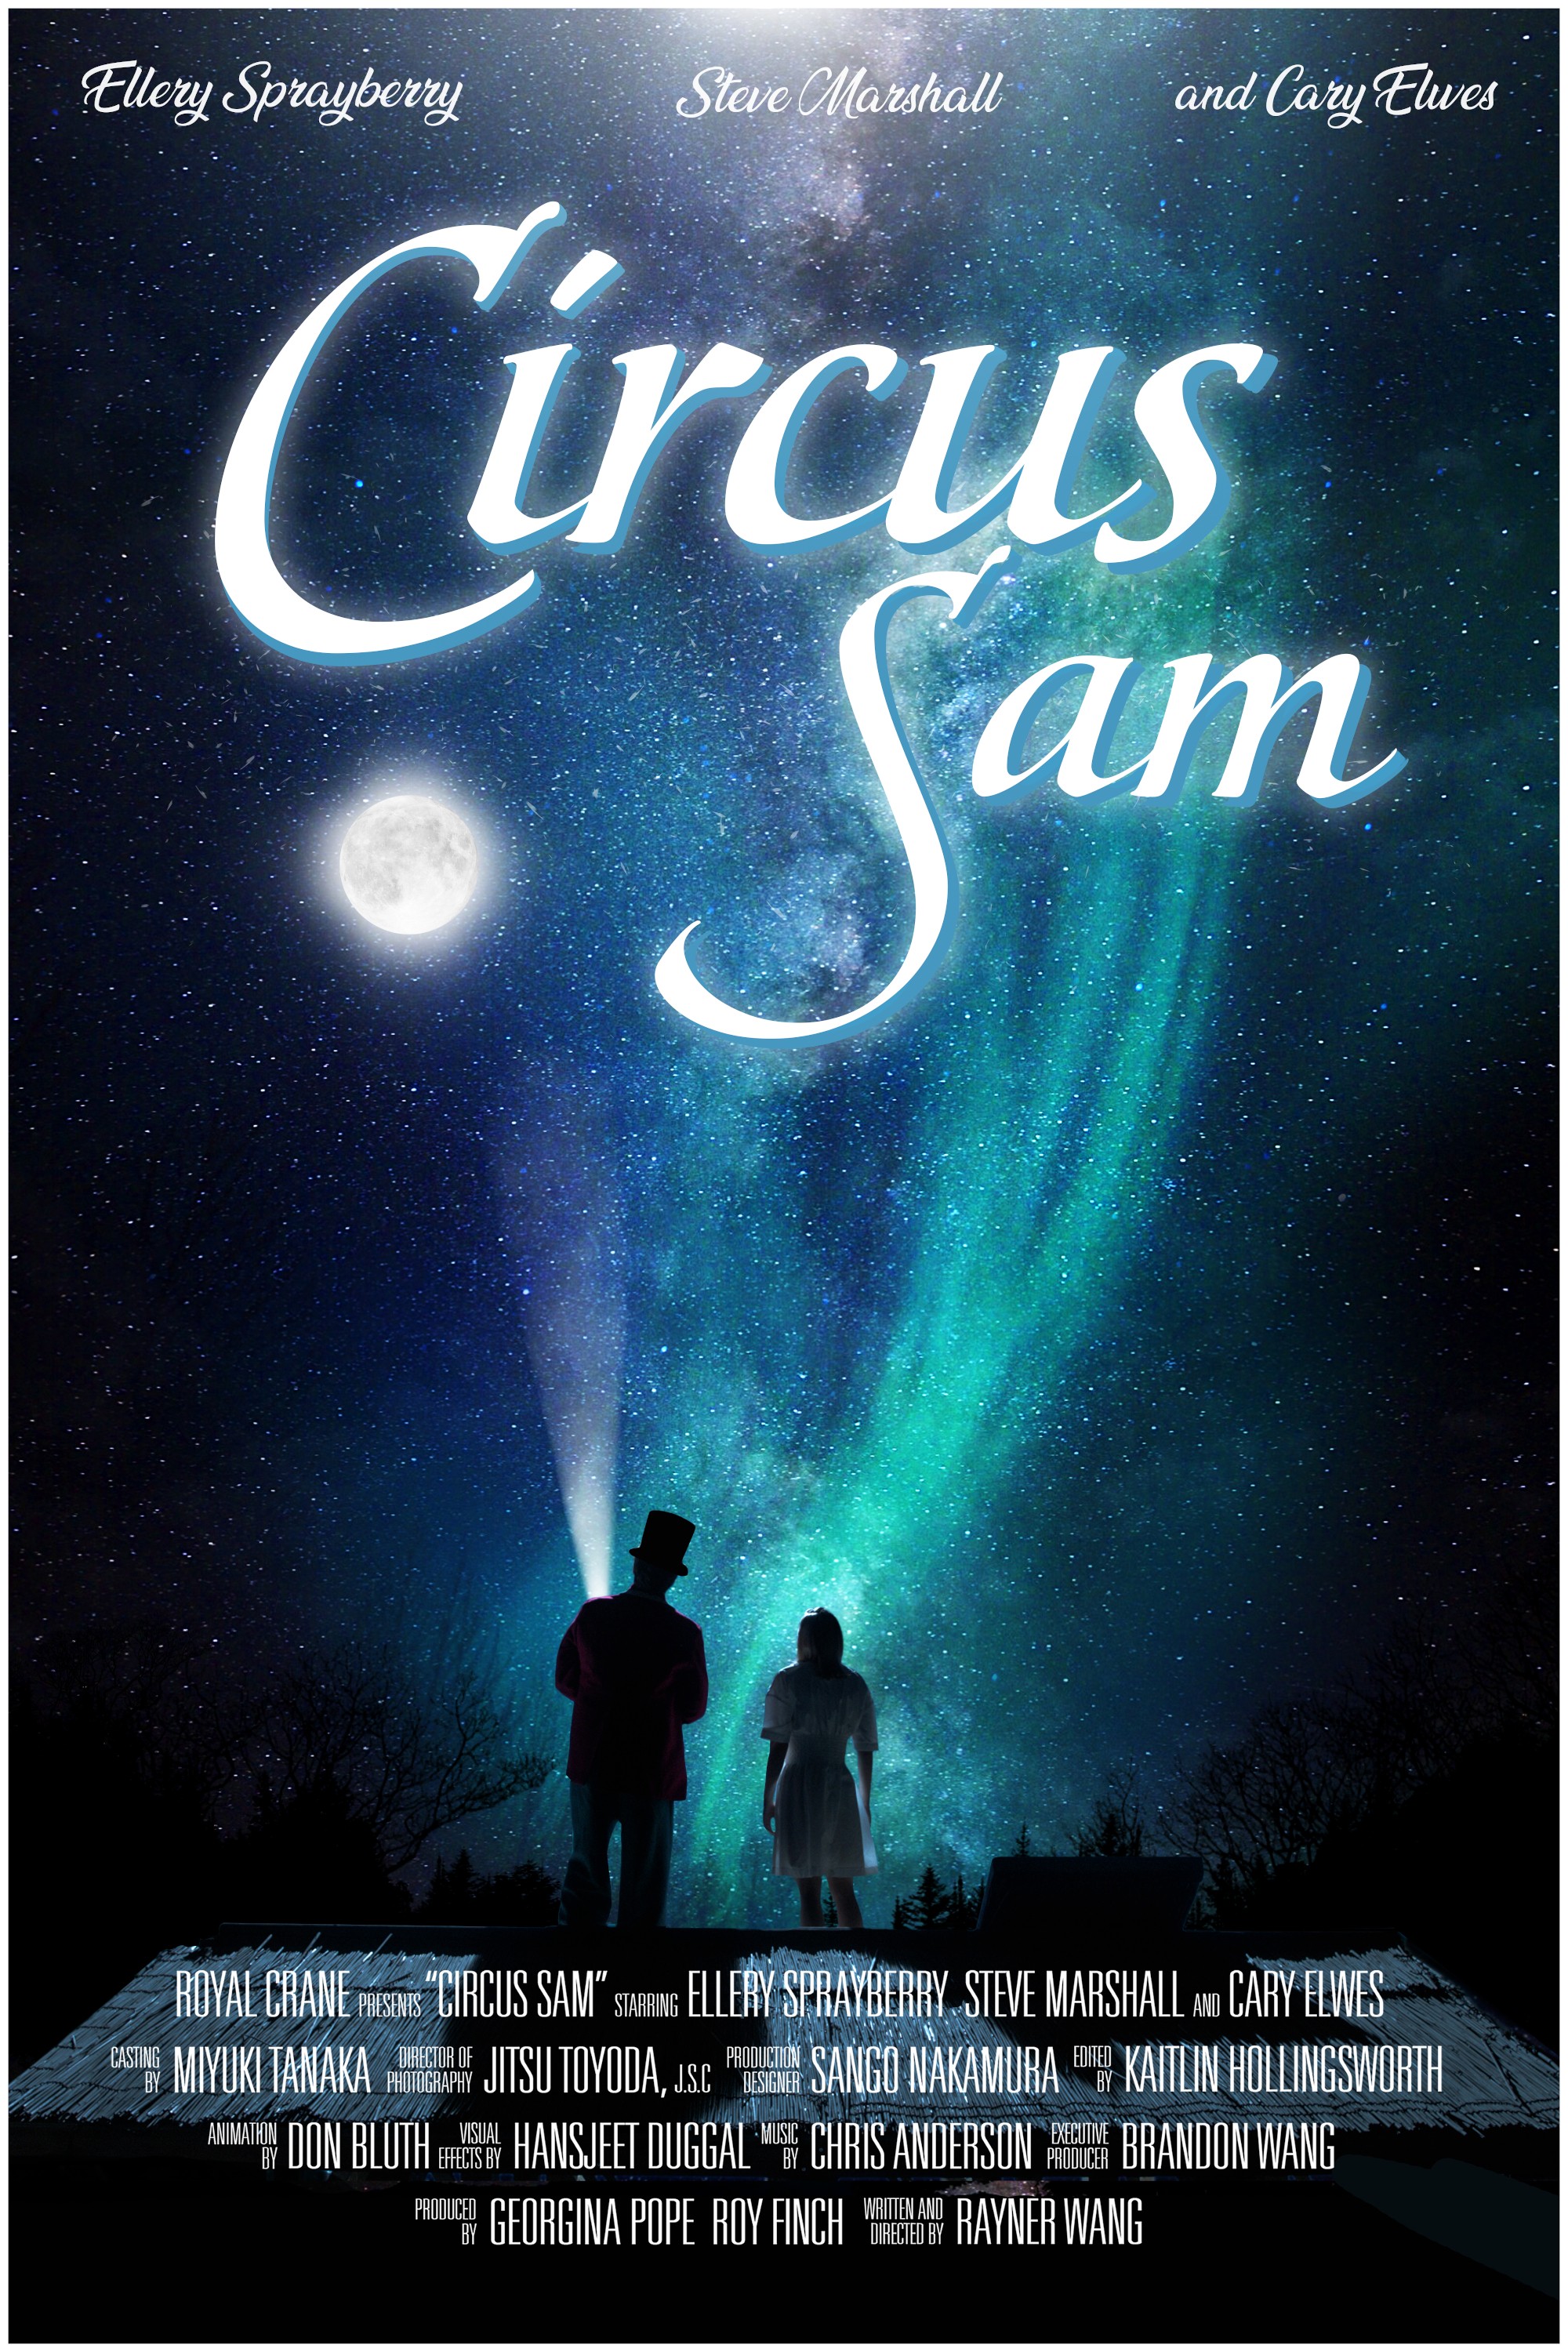 Mega Sized Movie Poster Image for Circus Sam